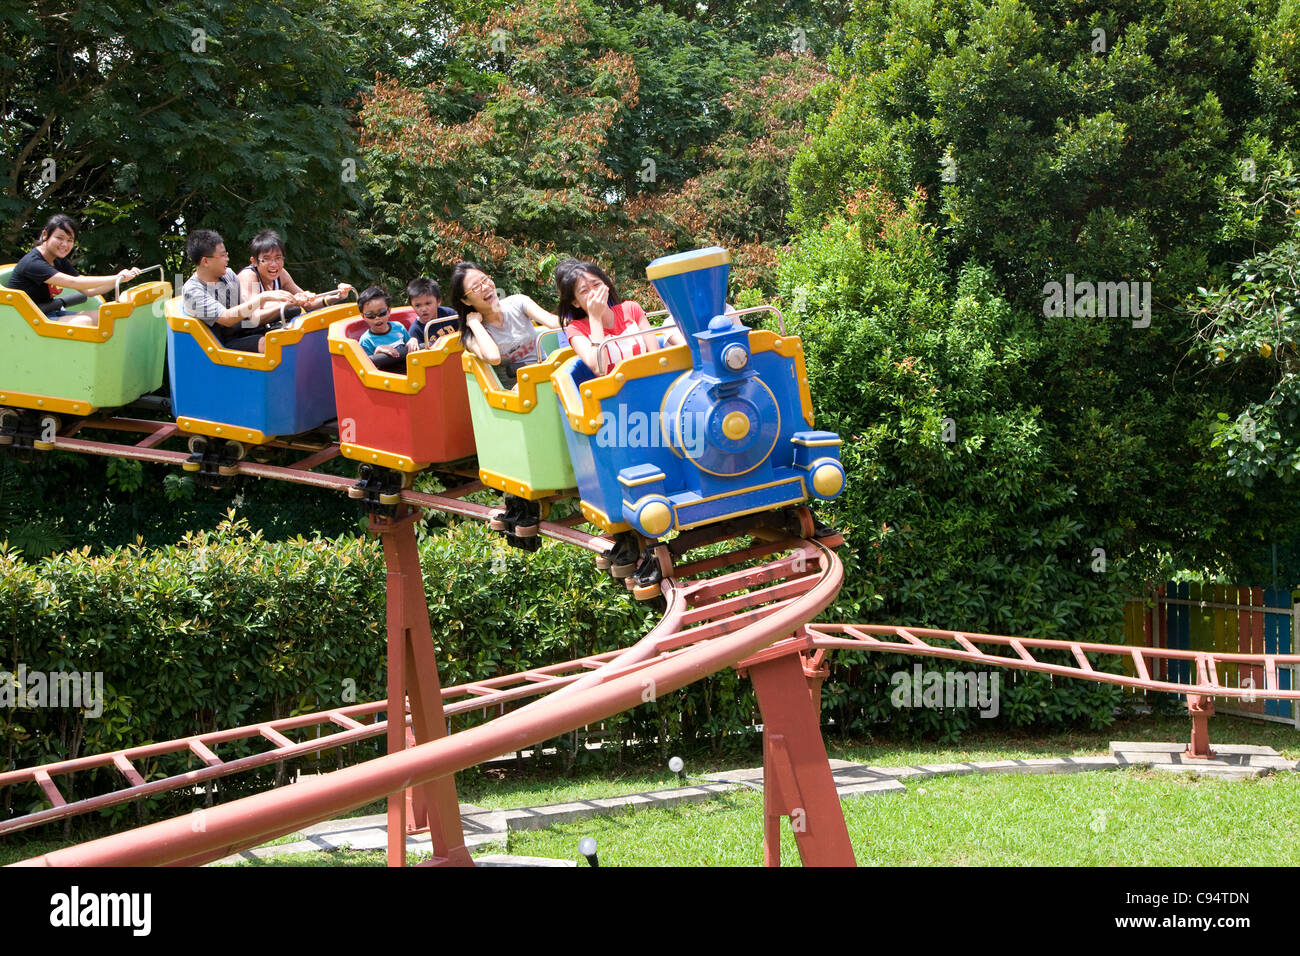 Children's Activities: Escape Theme Park - wild train ride Stock Photo